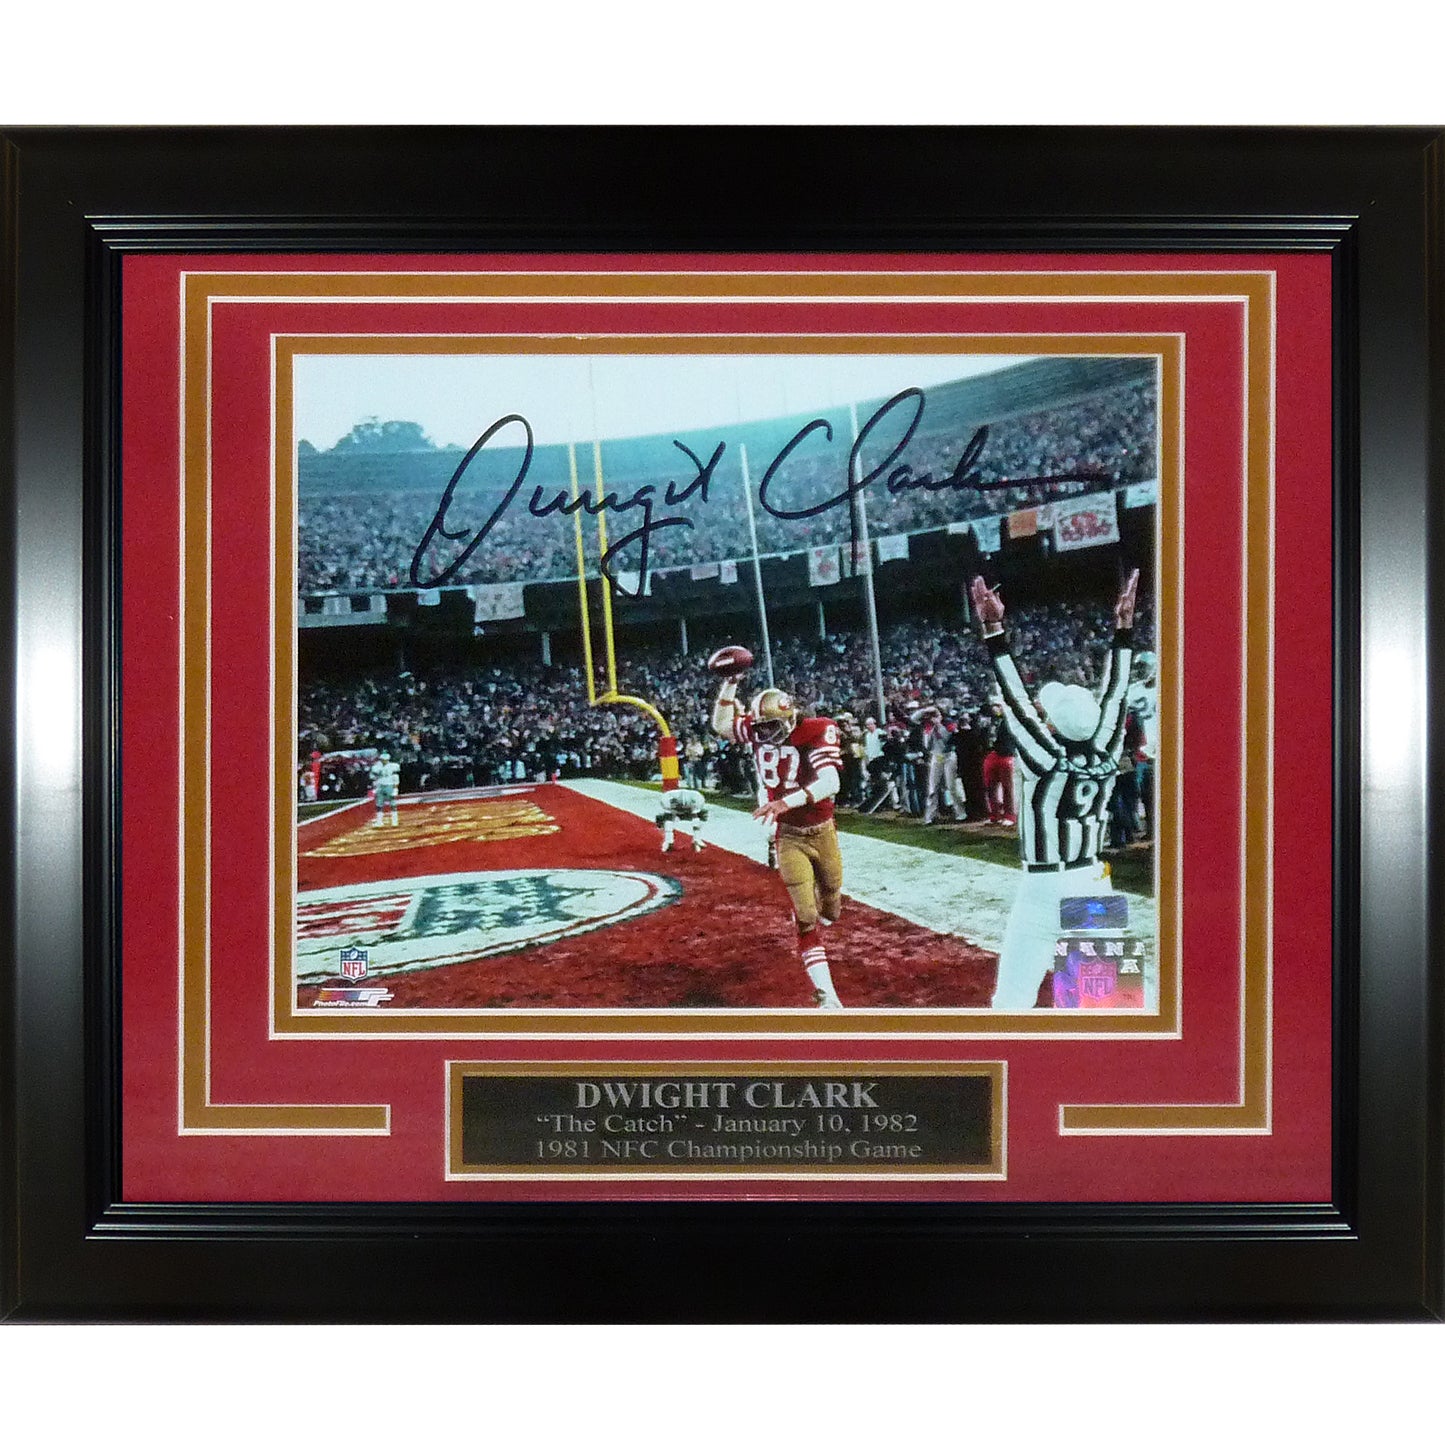 Dwight Clark Autographed San Francisco 49ers (The Catch Celebration) Deluxe Framed 8x10 Photo - JSA